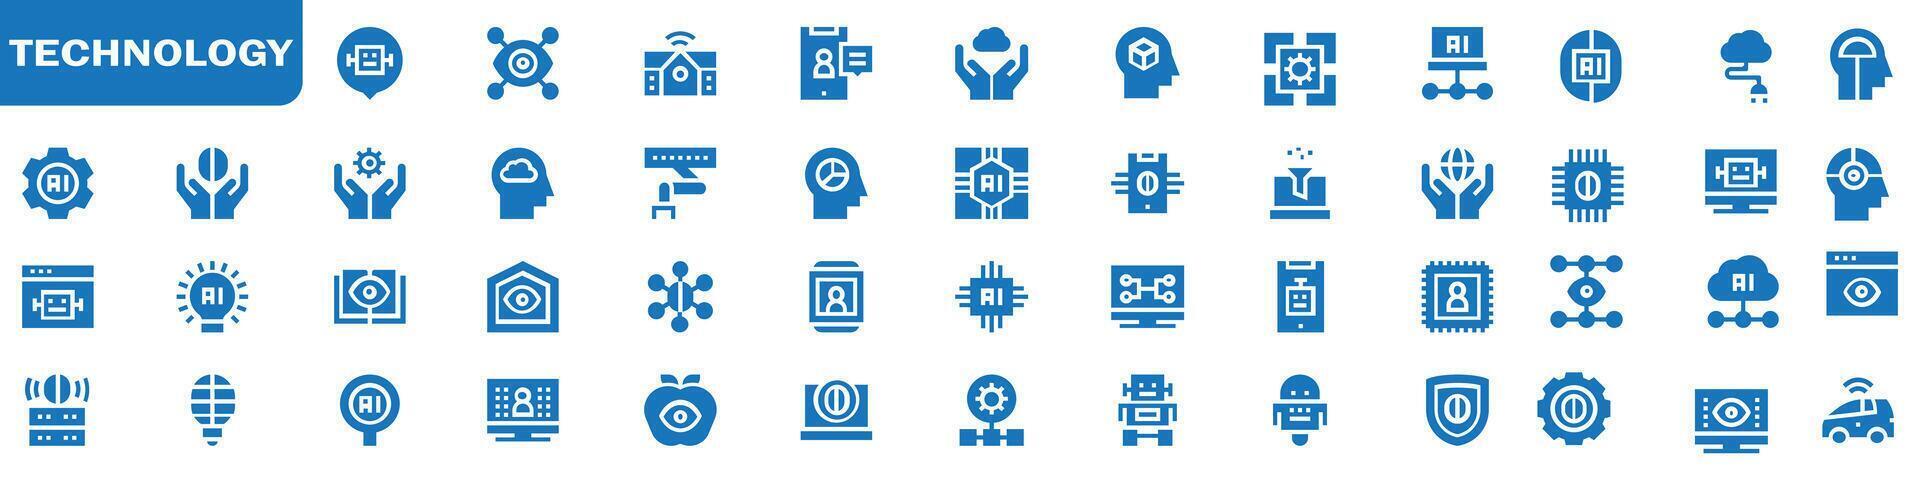 Technology flat icons set. Robots, biometrics, innovation, smart, blockchain. Flat icon collection. eps 10 vector